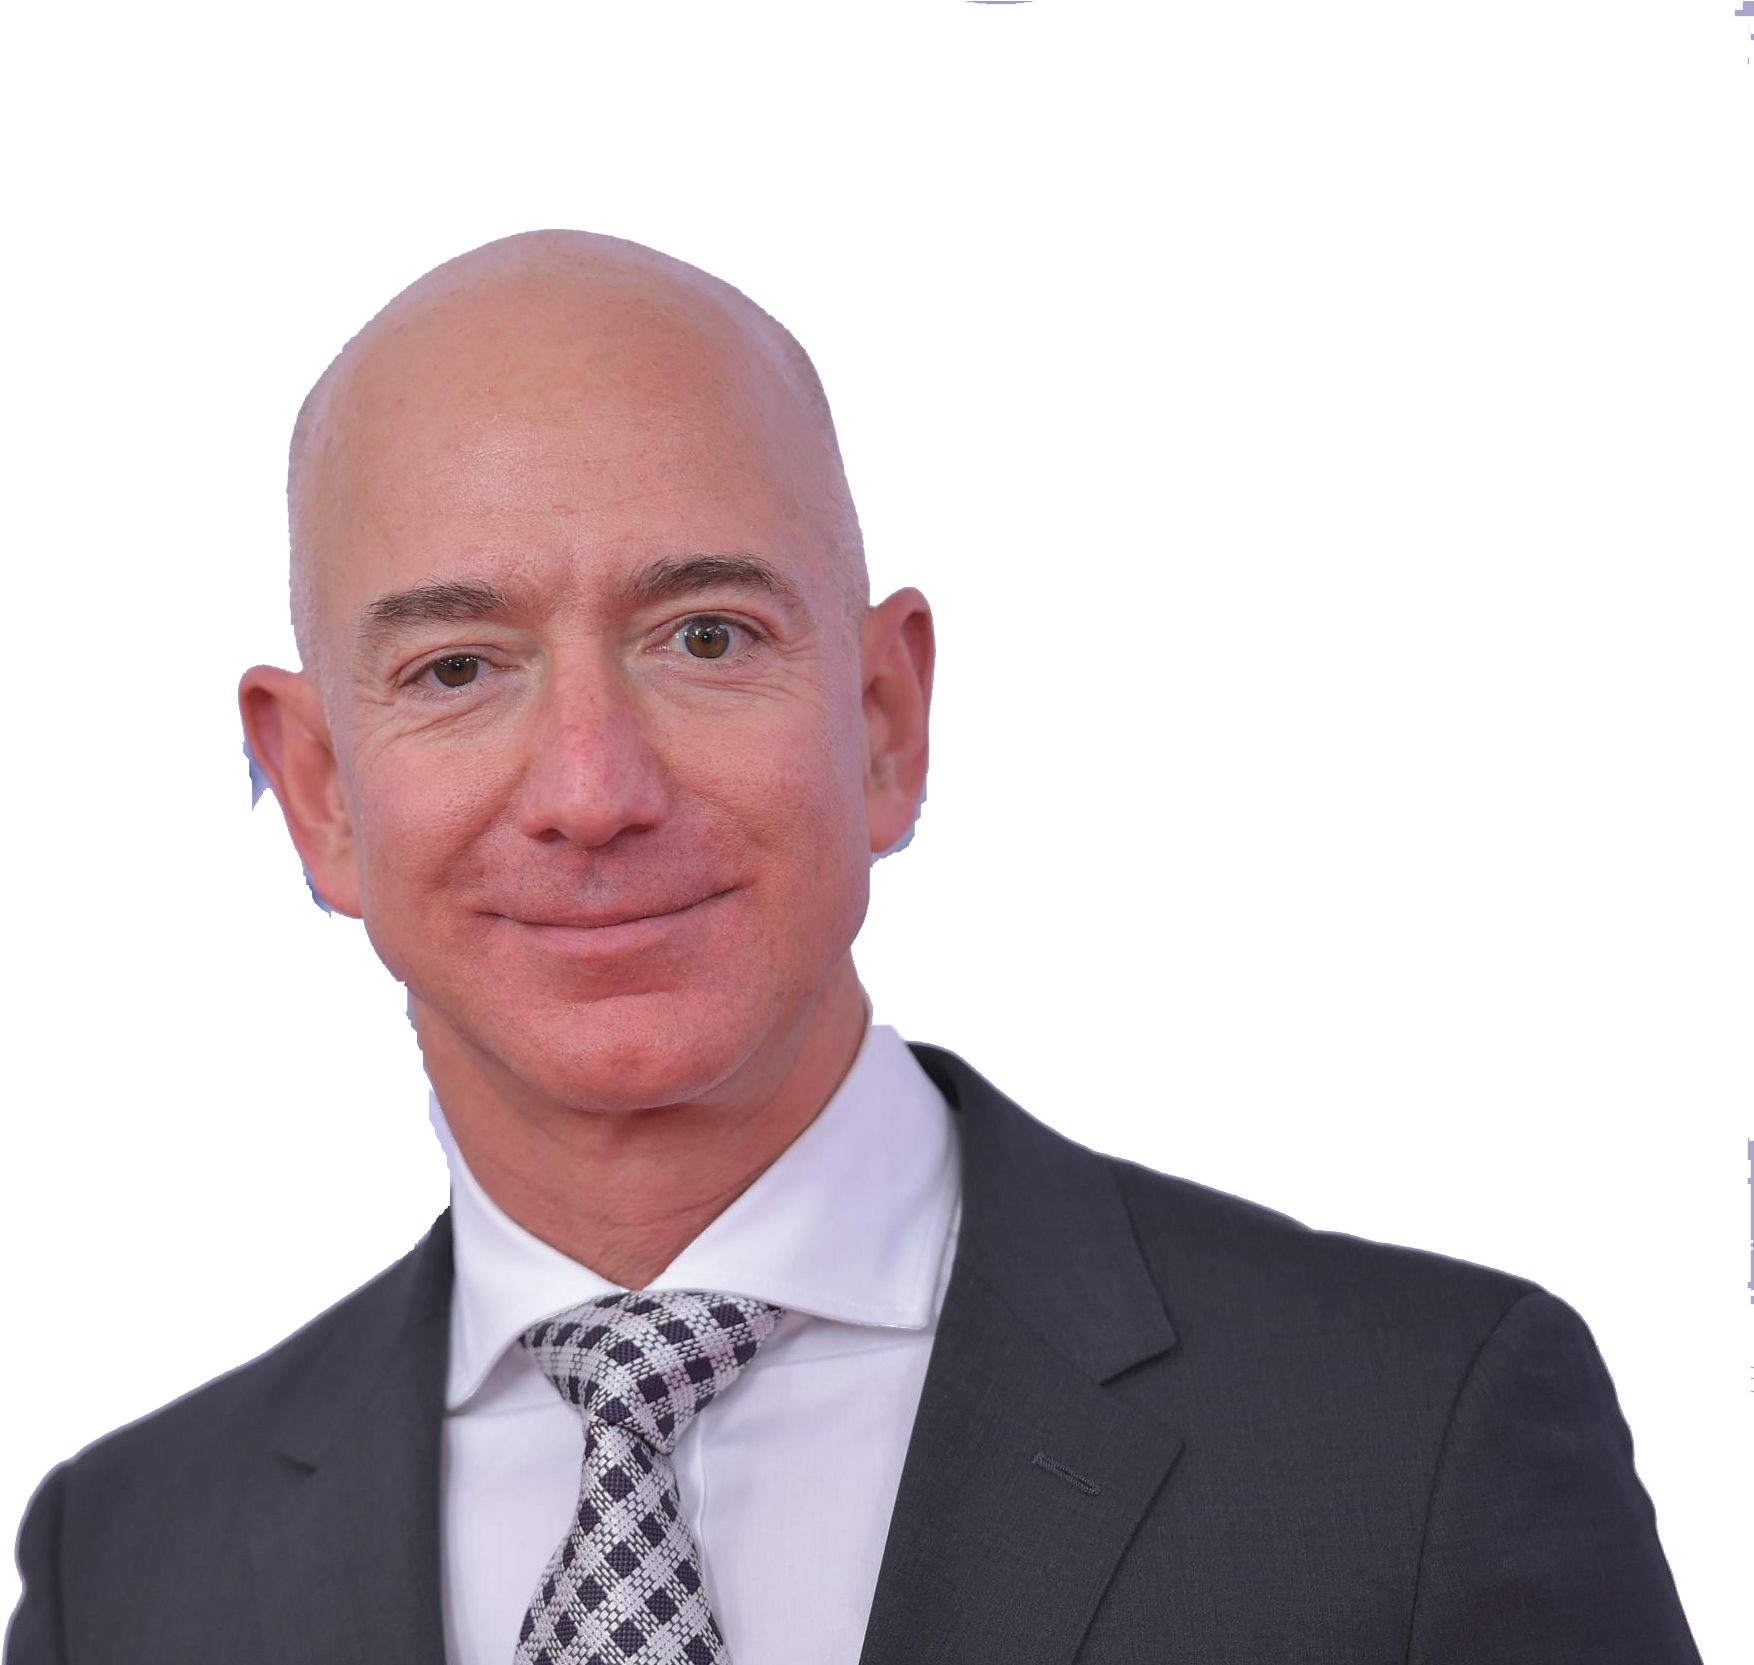 Jeff Bezos Transparent Image